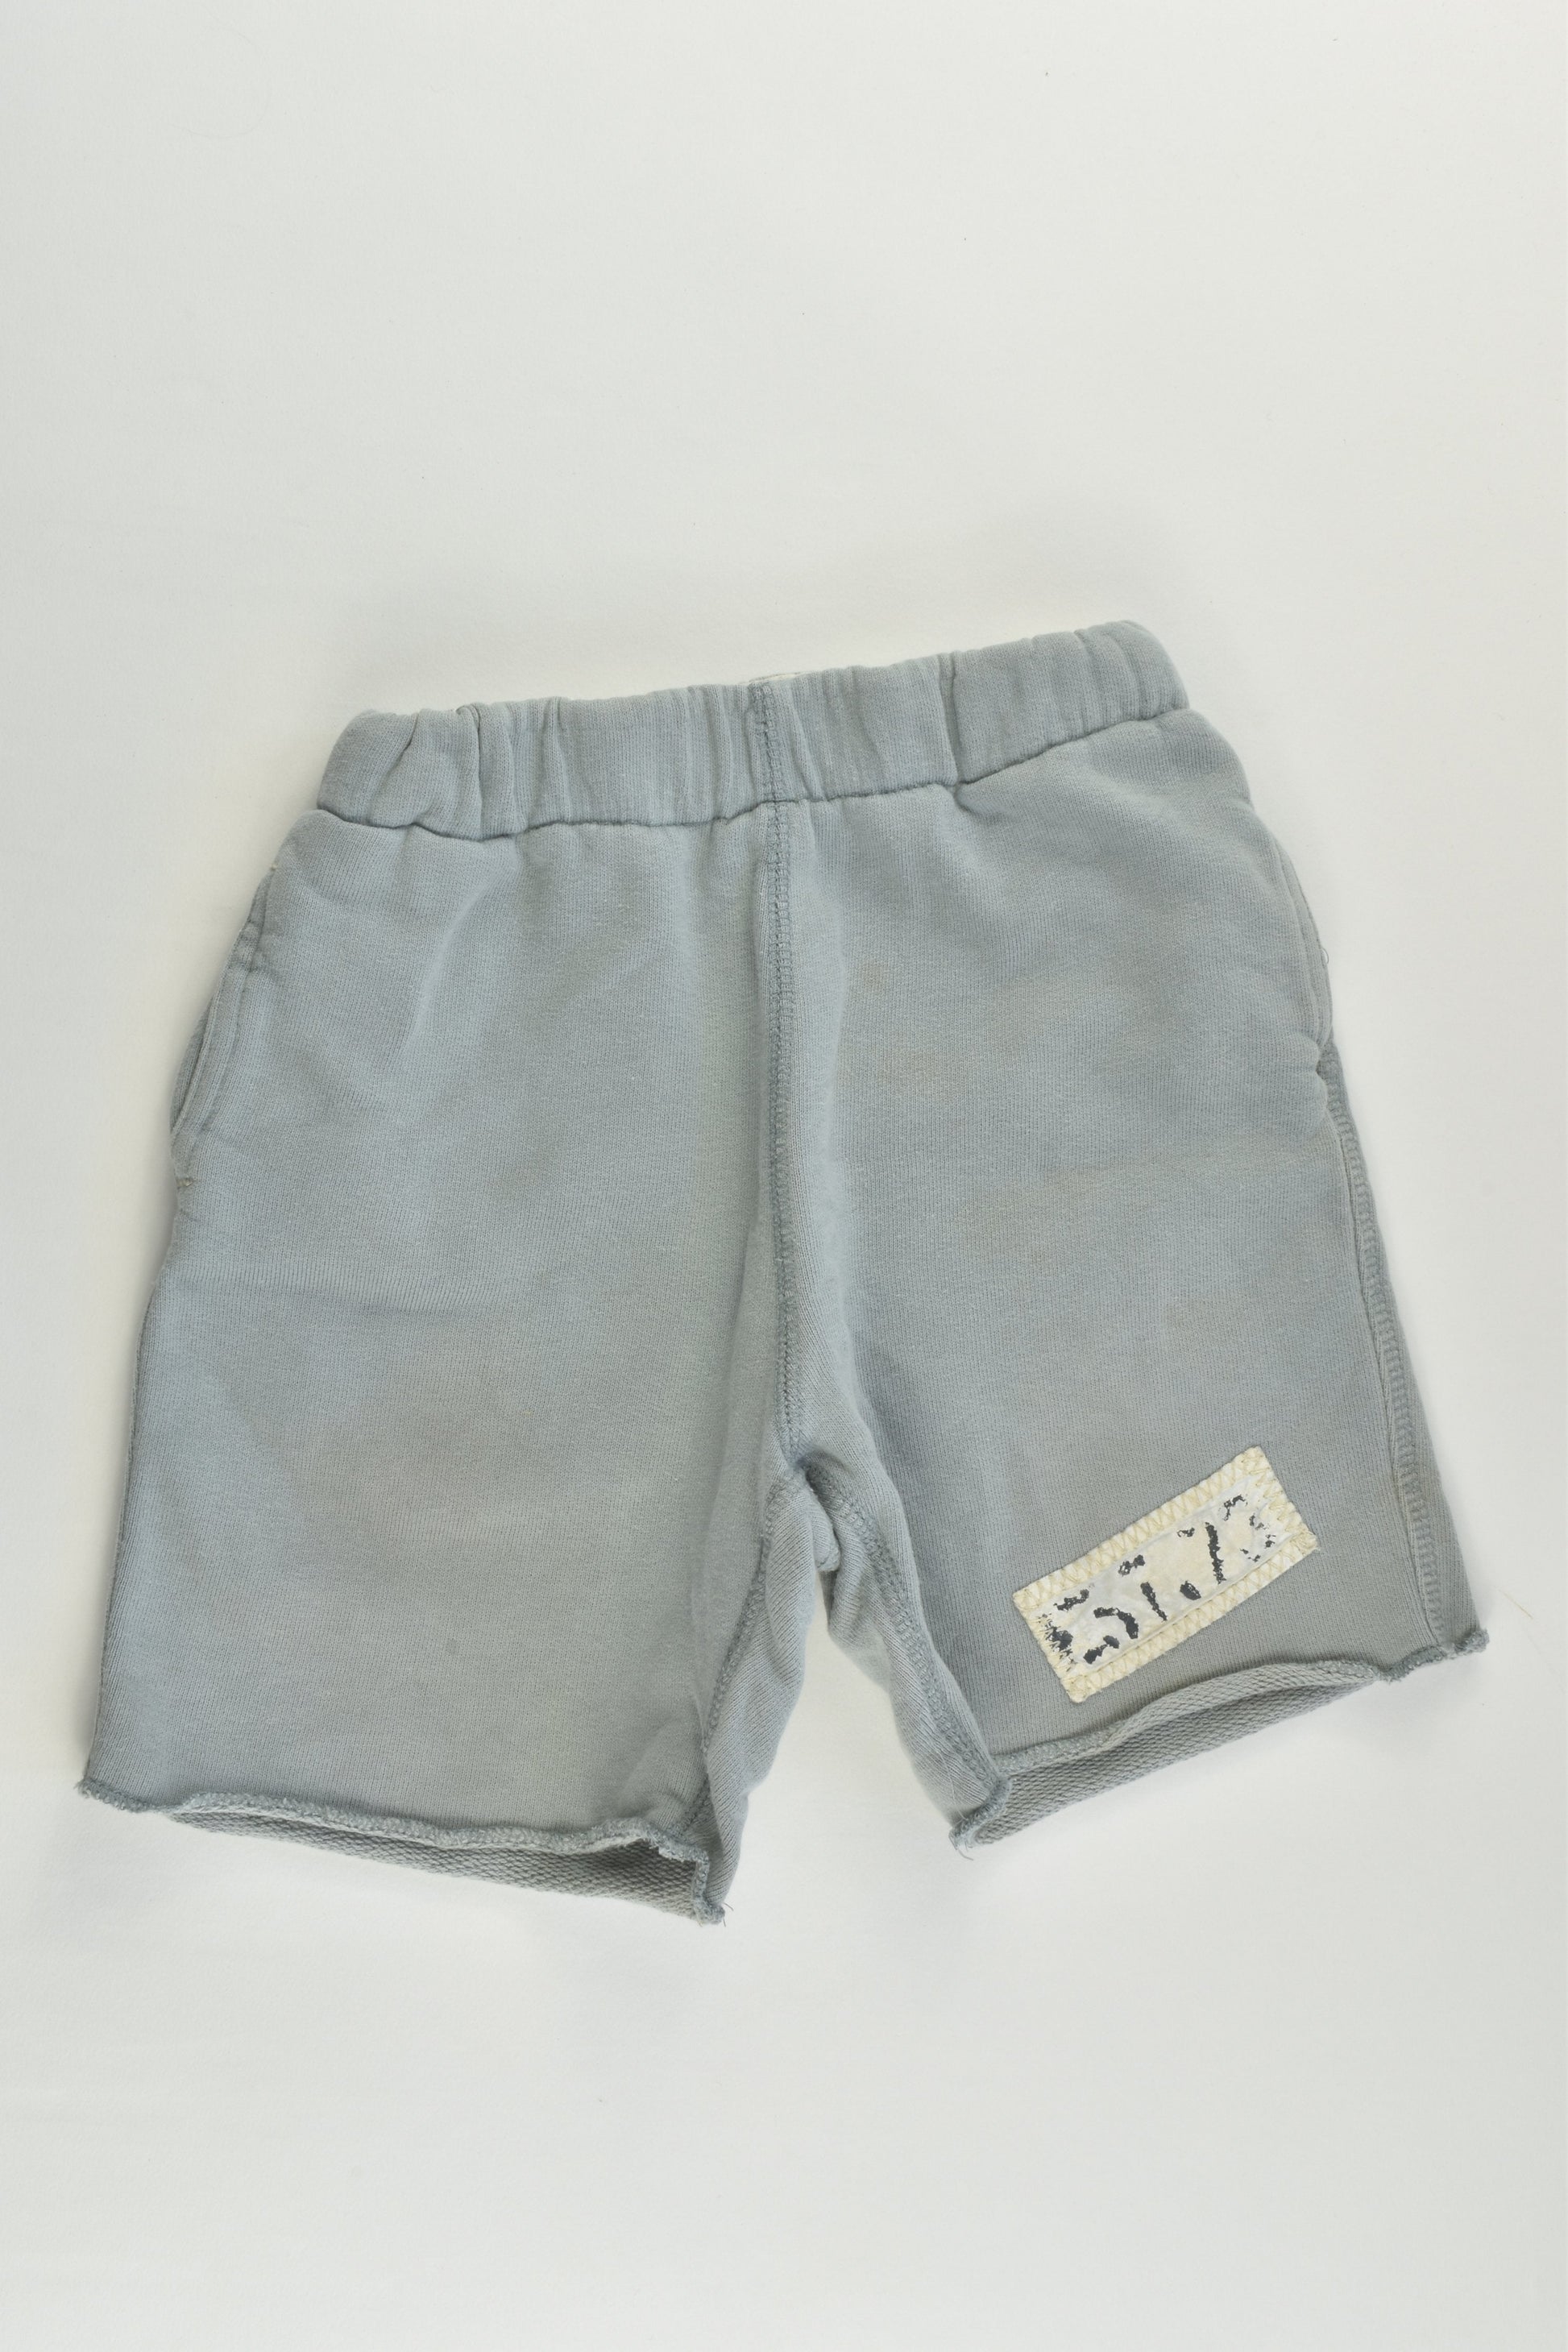 Timberland Size 1 (18 months) Shorts